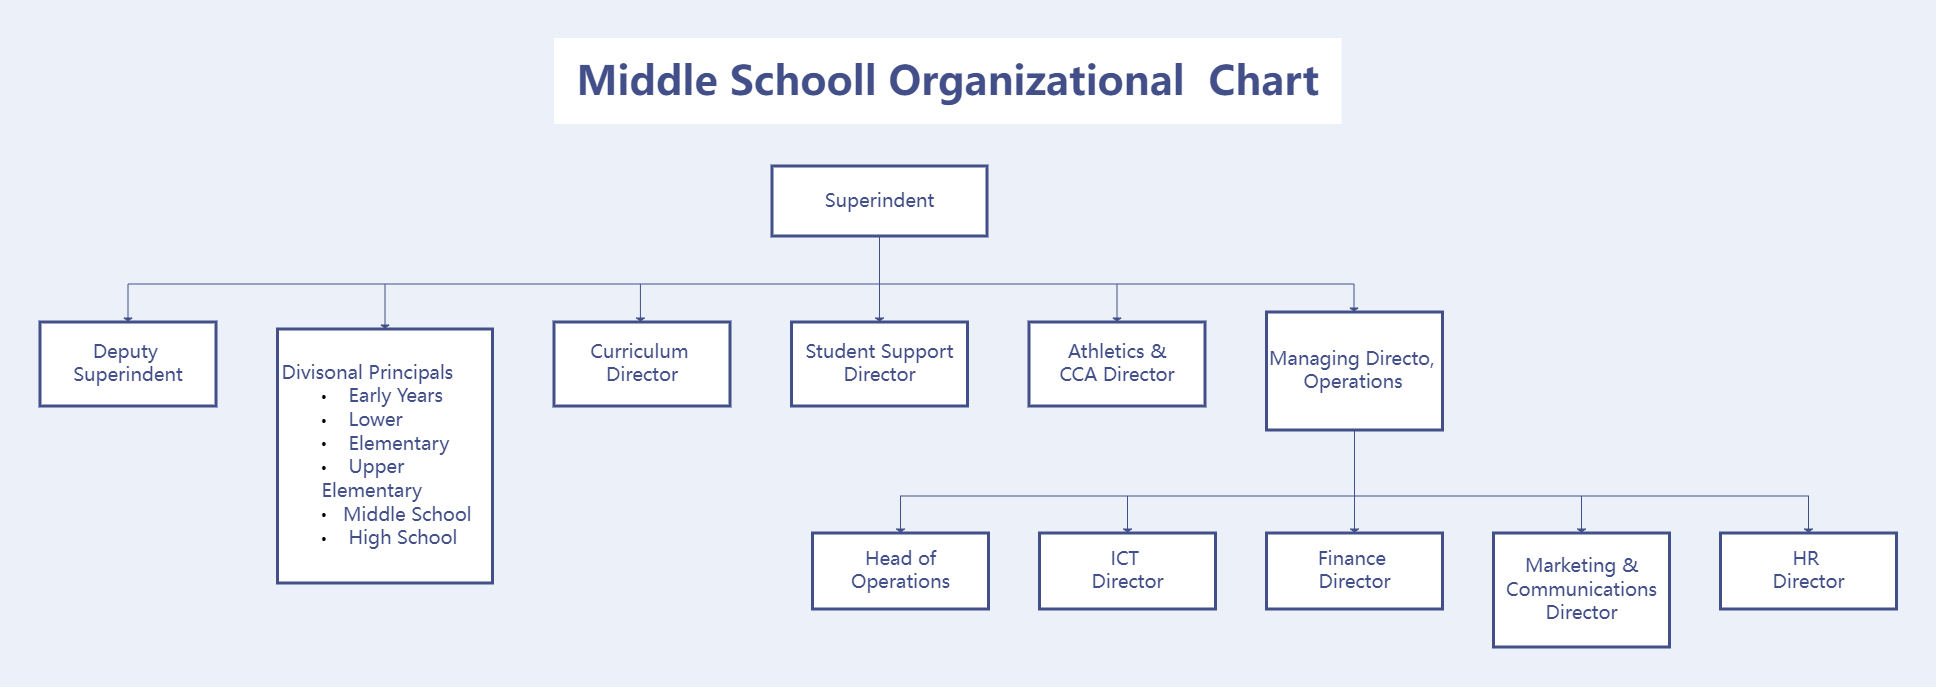 Middle School Organizational Chart